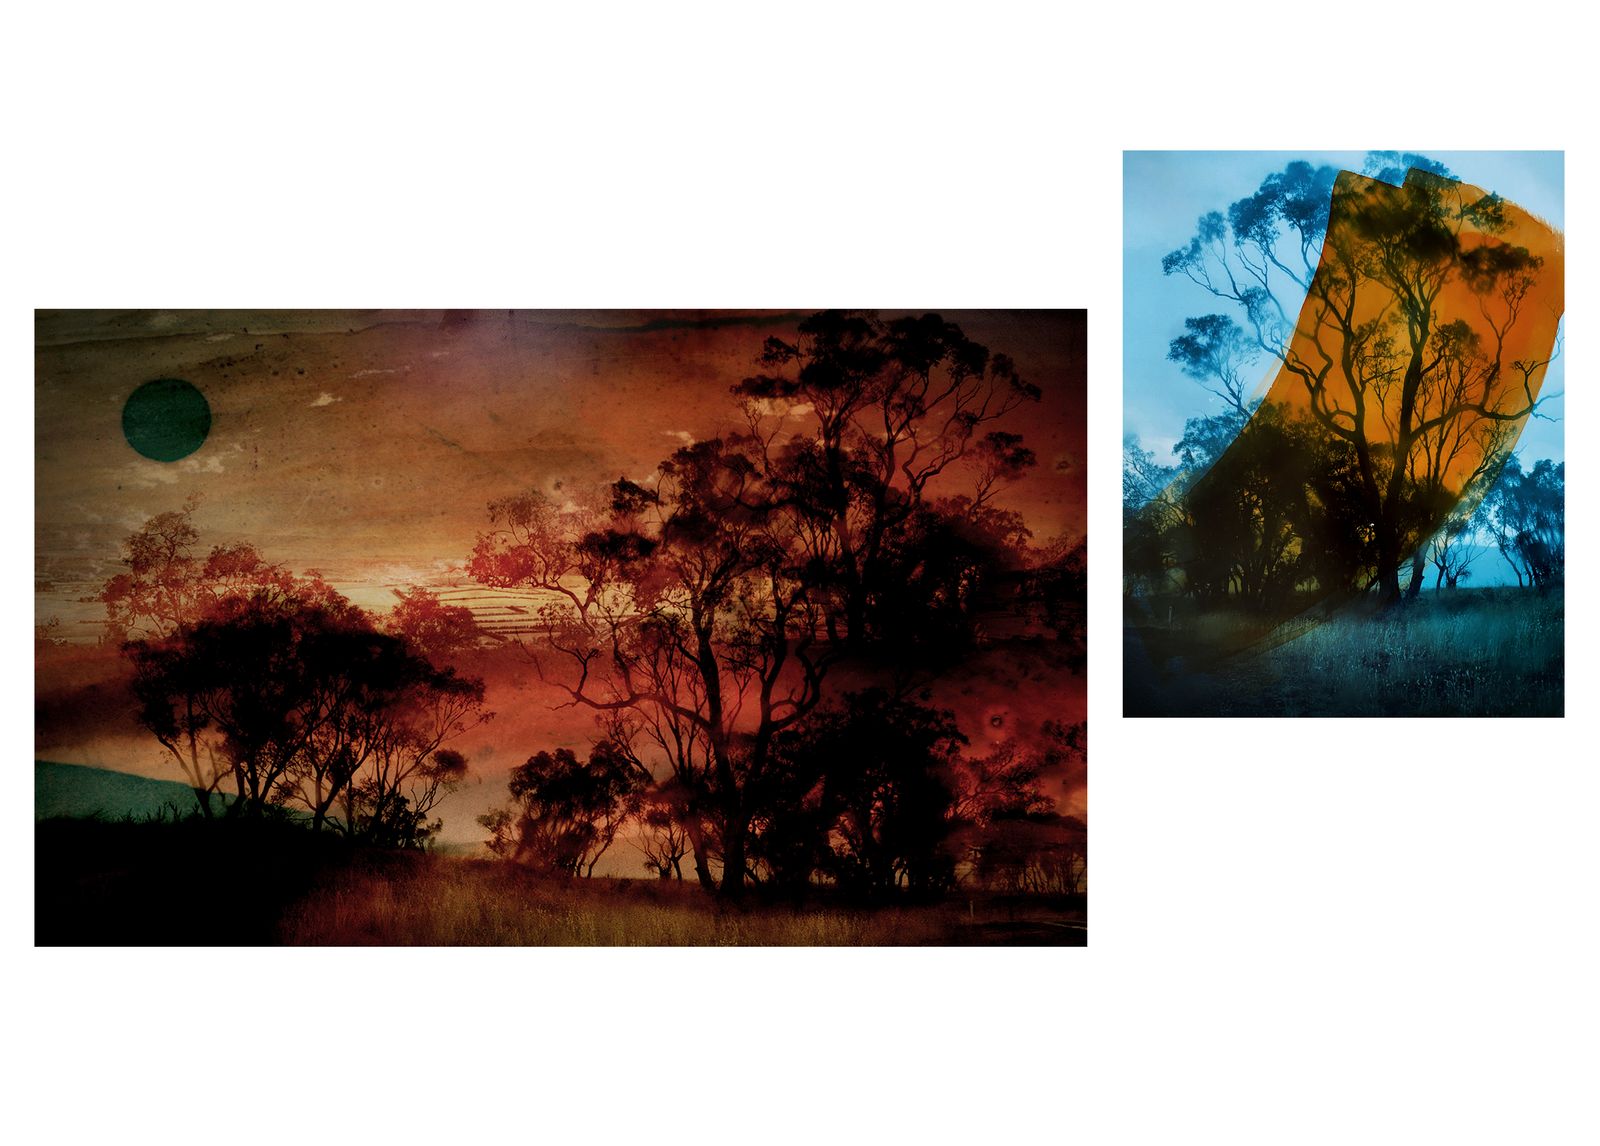 © Aletheia Casey - Image on left: Reimagined landscape, Bathurst (Wiradjuri land).Image on right: Bathurst landscape, painted with ink.